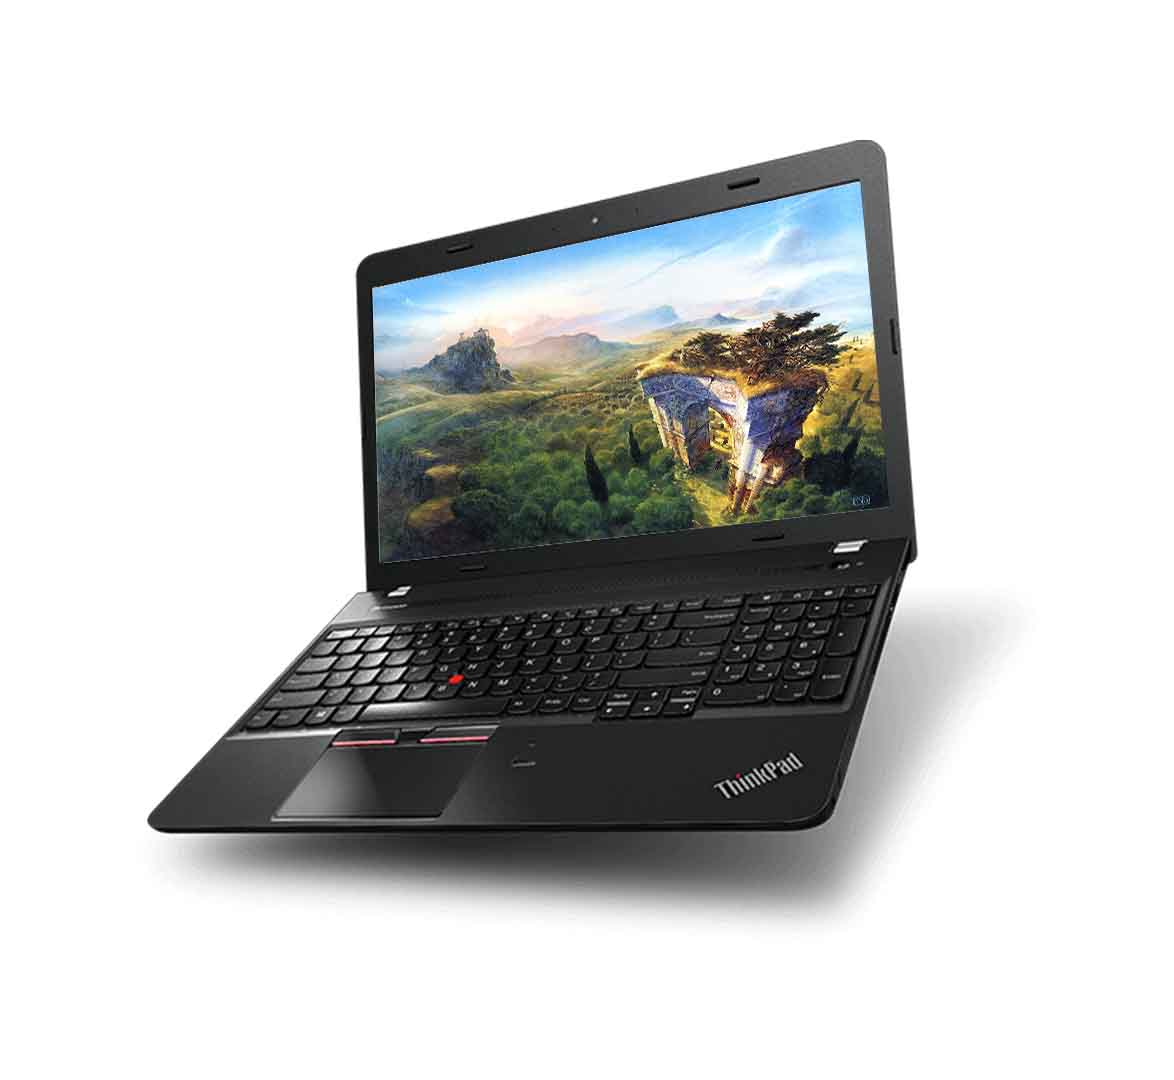 Lenovo Thinkpad E560 Business Laptop, Intel Core i7-6th Generation CPU, 8GB RAM, 1TB HDD, AMD Radeon R7 Graphics, 15 inch Display, Windows 10 Pro